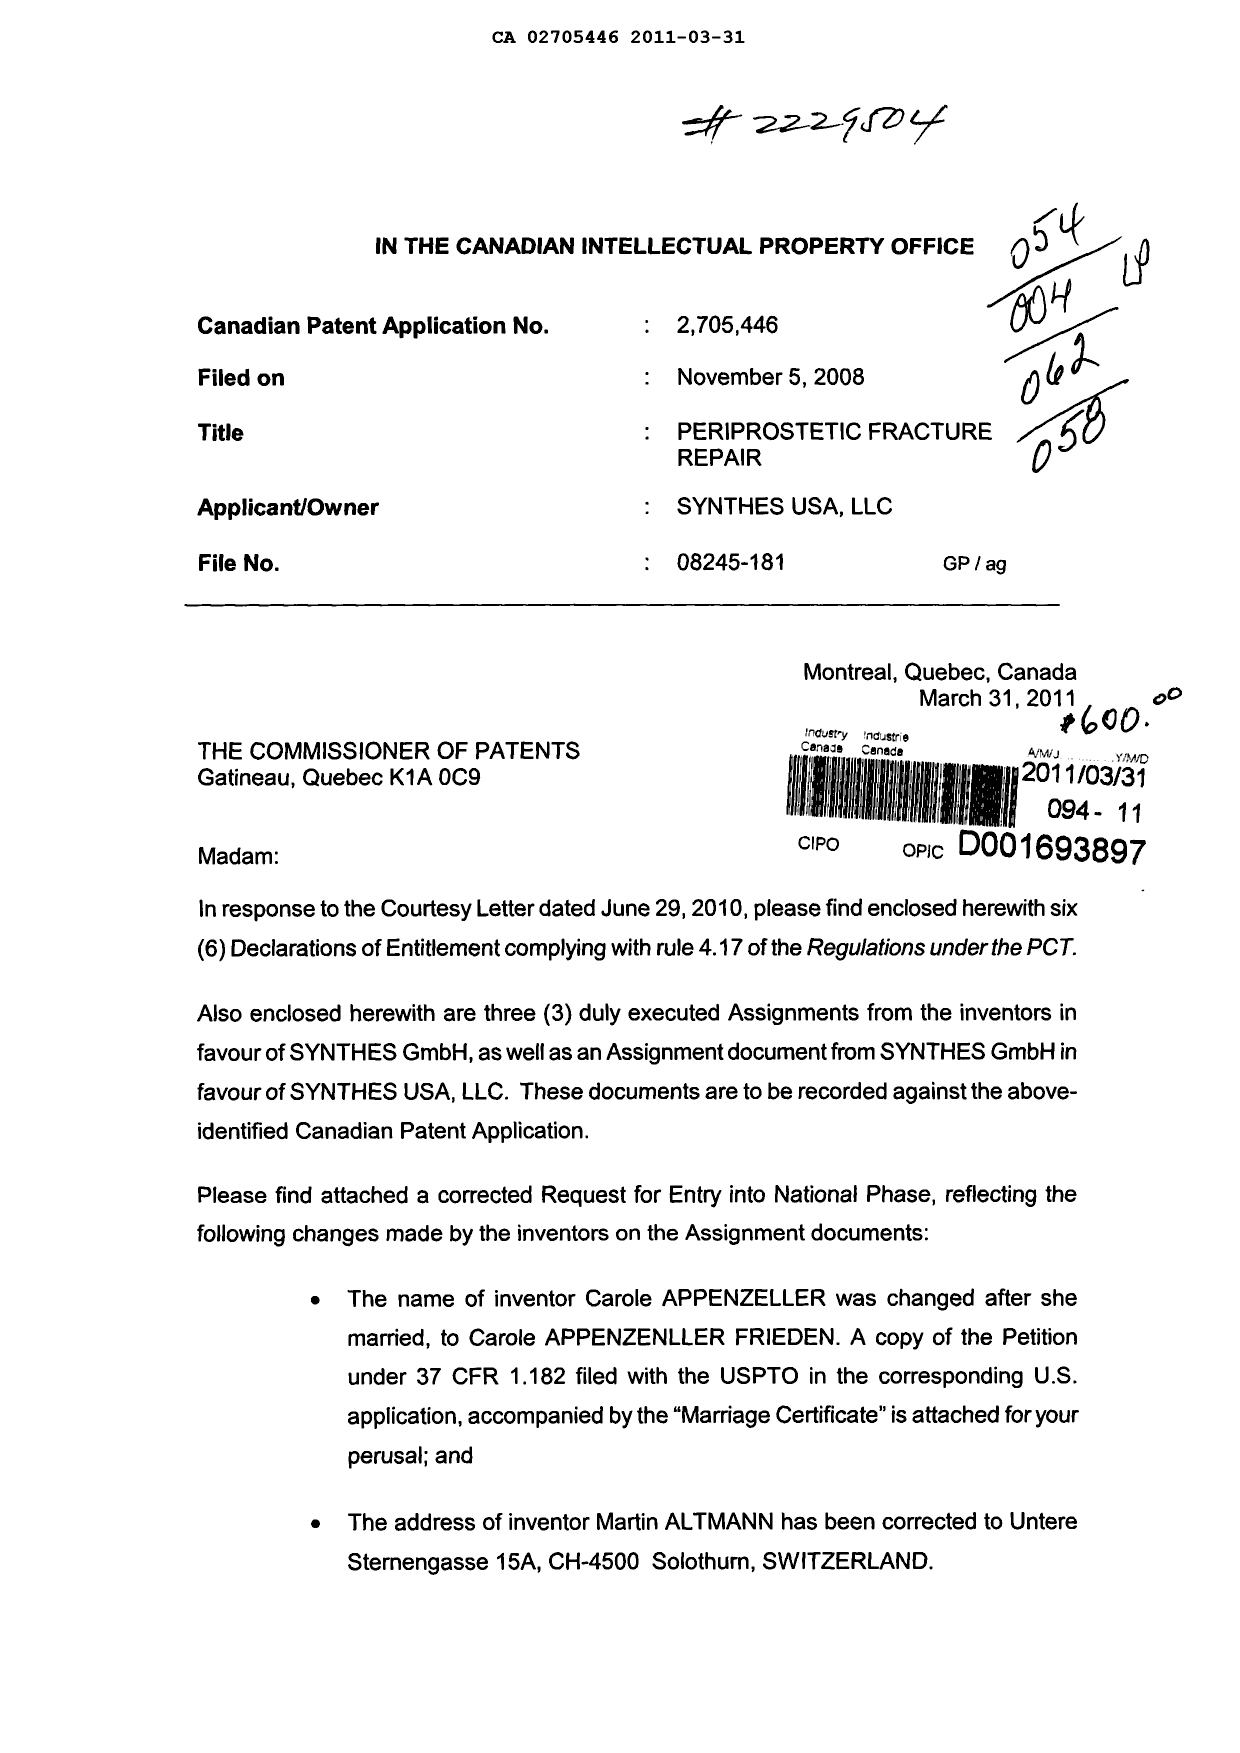 Canadian Patent Document 2705446. Correspondence 20110331. Image 1 of 8